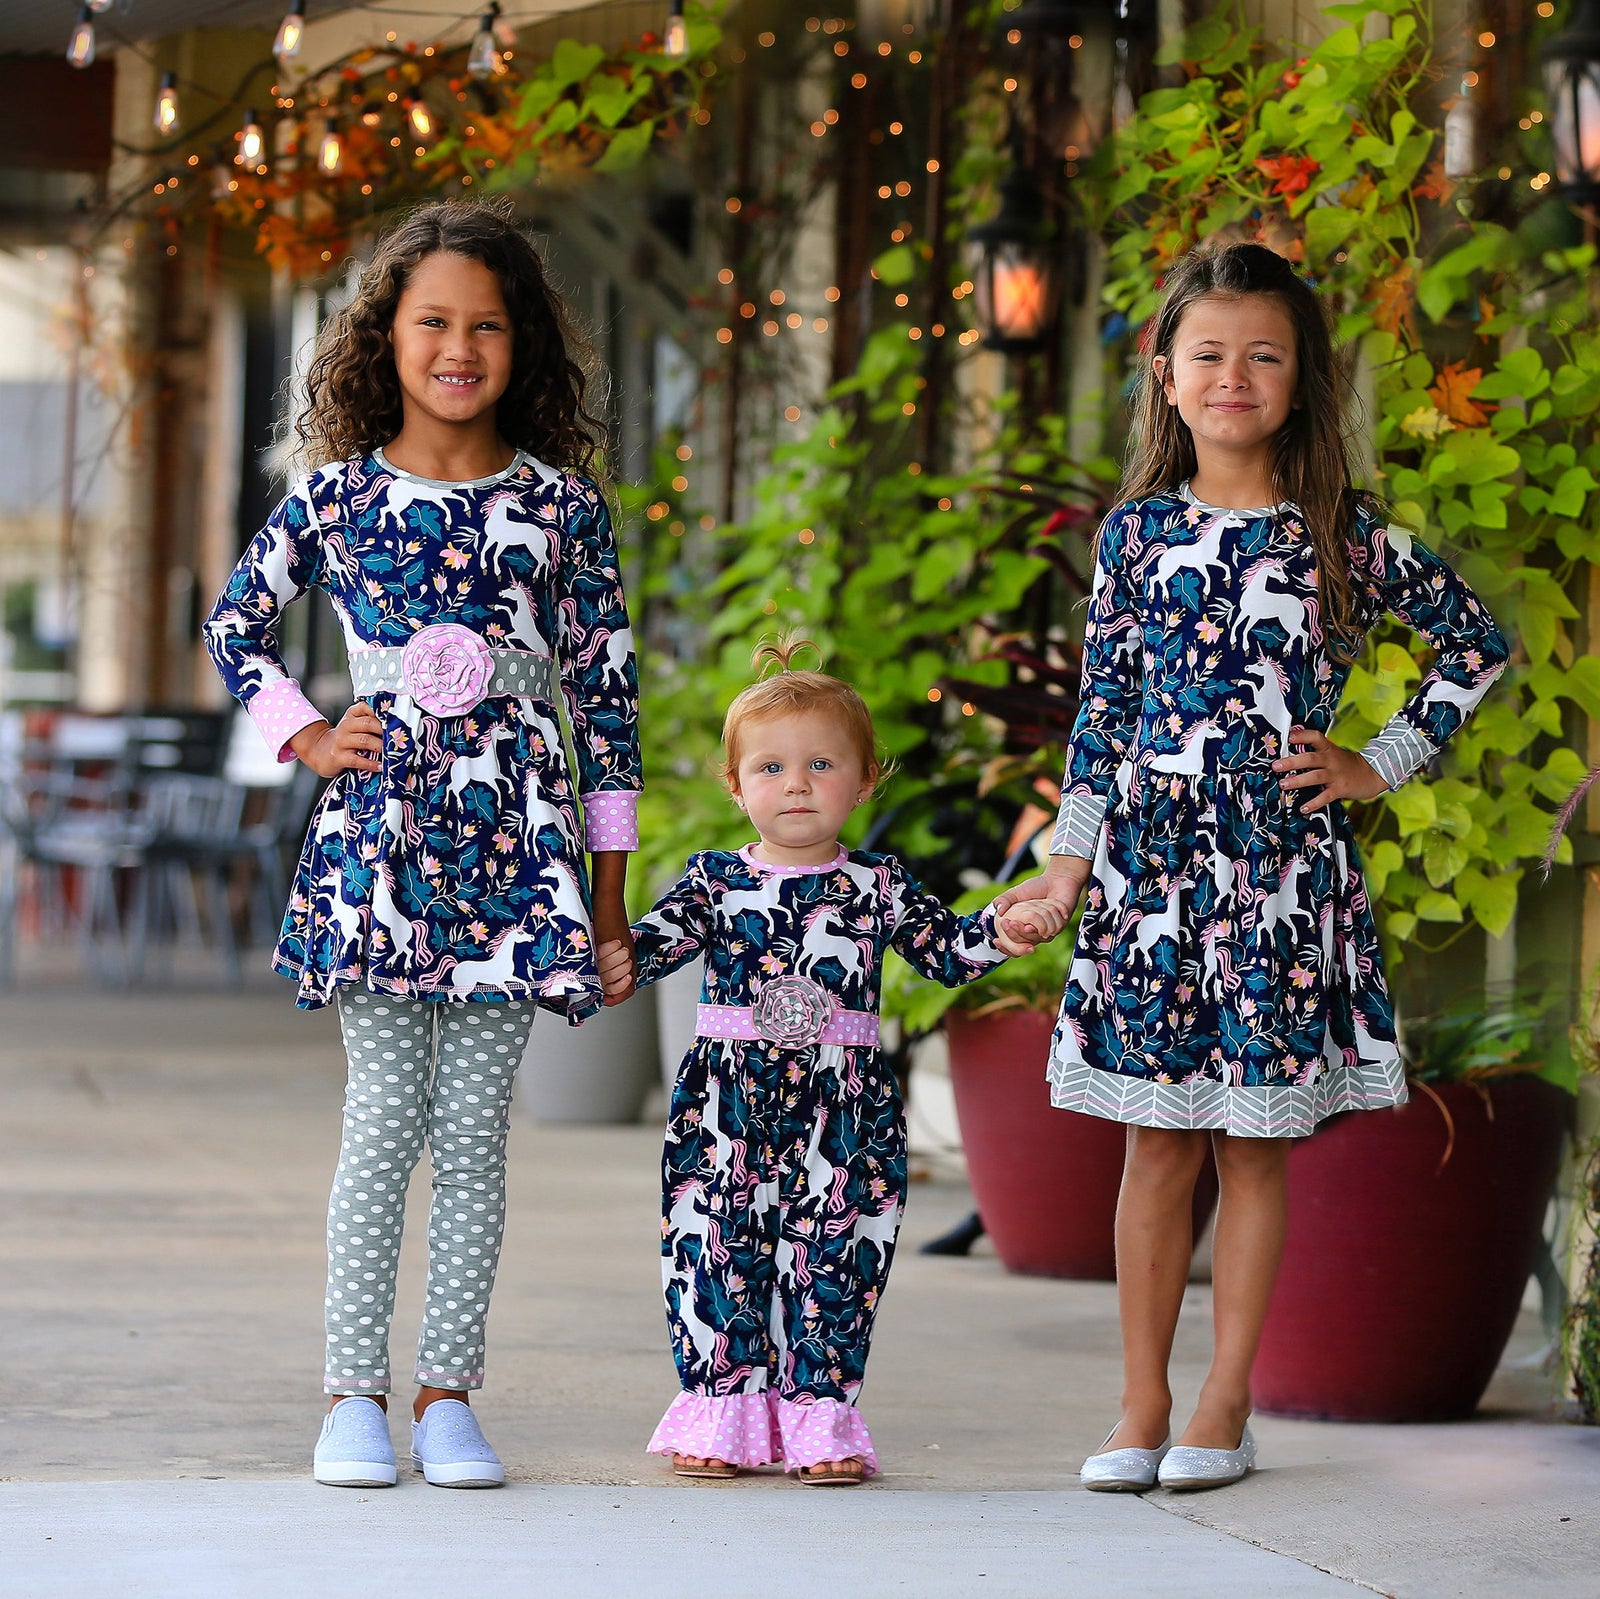 Original Unicorn Polka Dot Cotton Fall Winter Baby Big Girls Dress for Sizes 2/3T-11/12 by AnnLoren